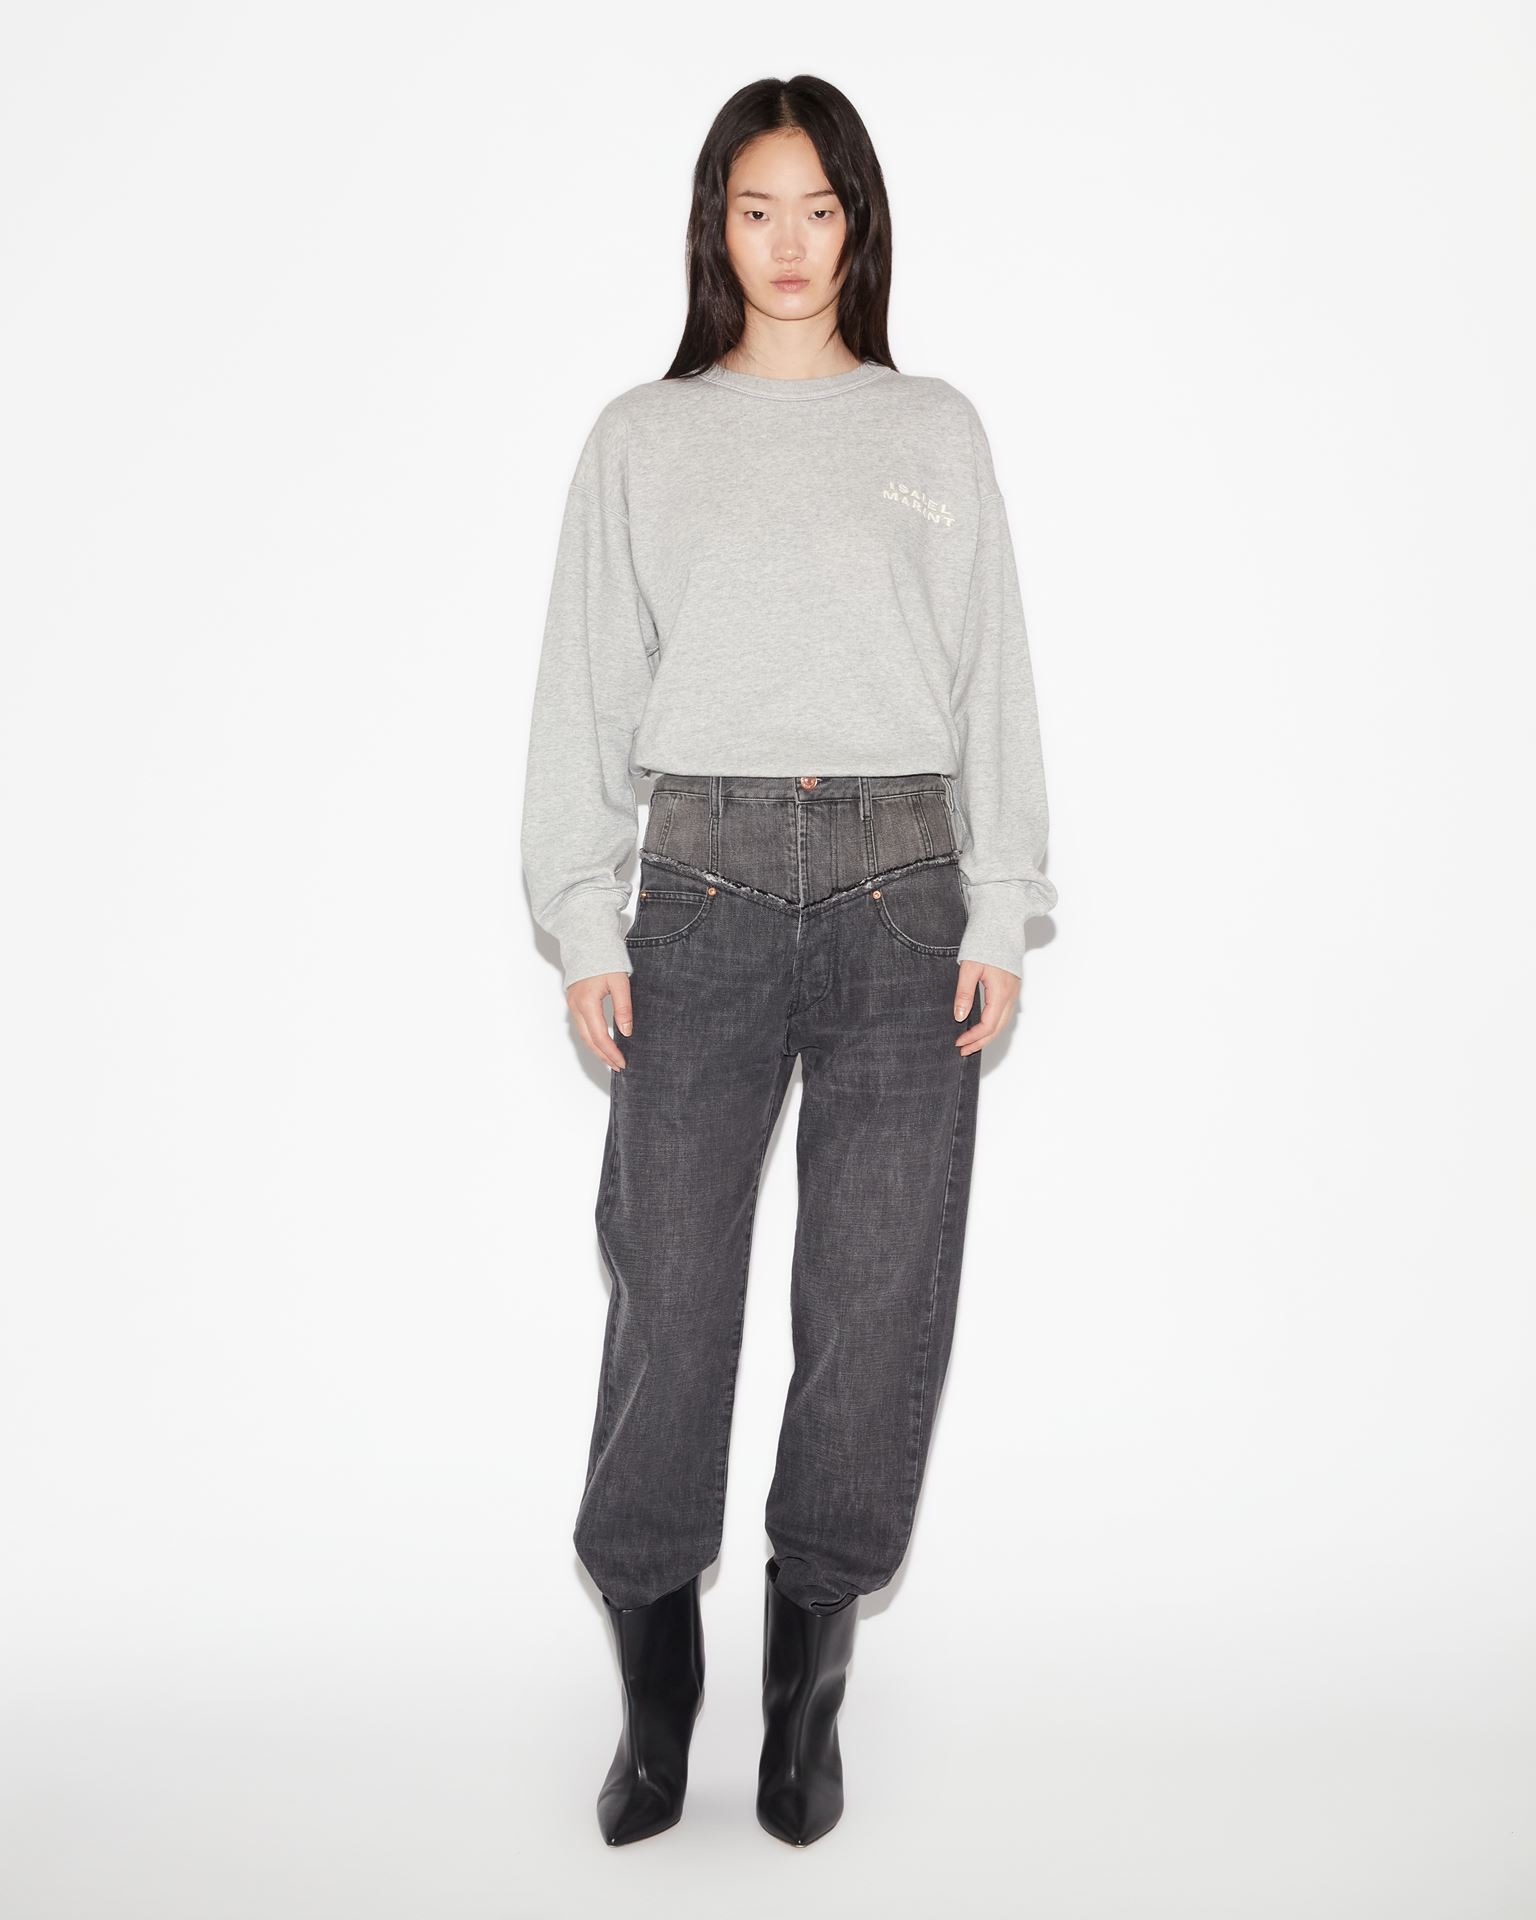 Isabel Marant, Shad Logo Sweatshirt - Women - Grey